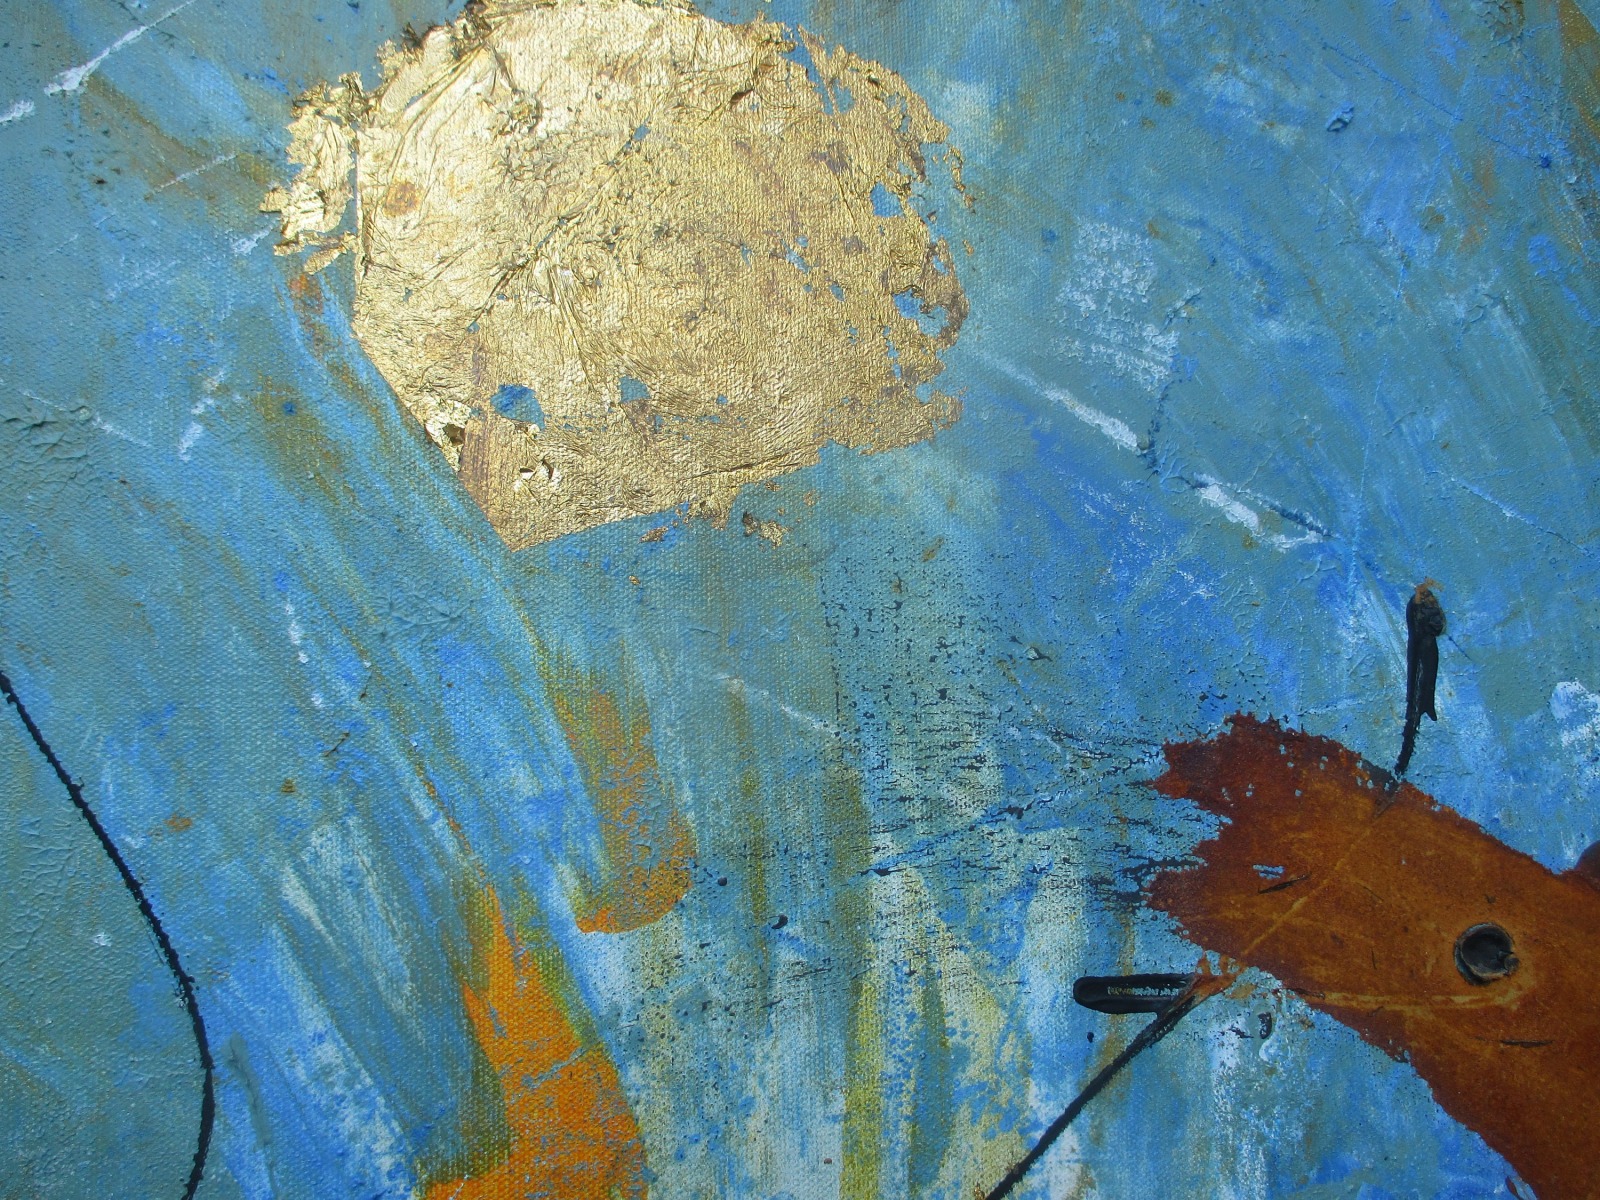 abstrakt blau mit rost Original Öl / Leinwand xl 80x100cm moderne Malerei 7